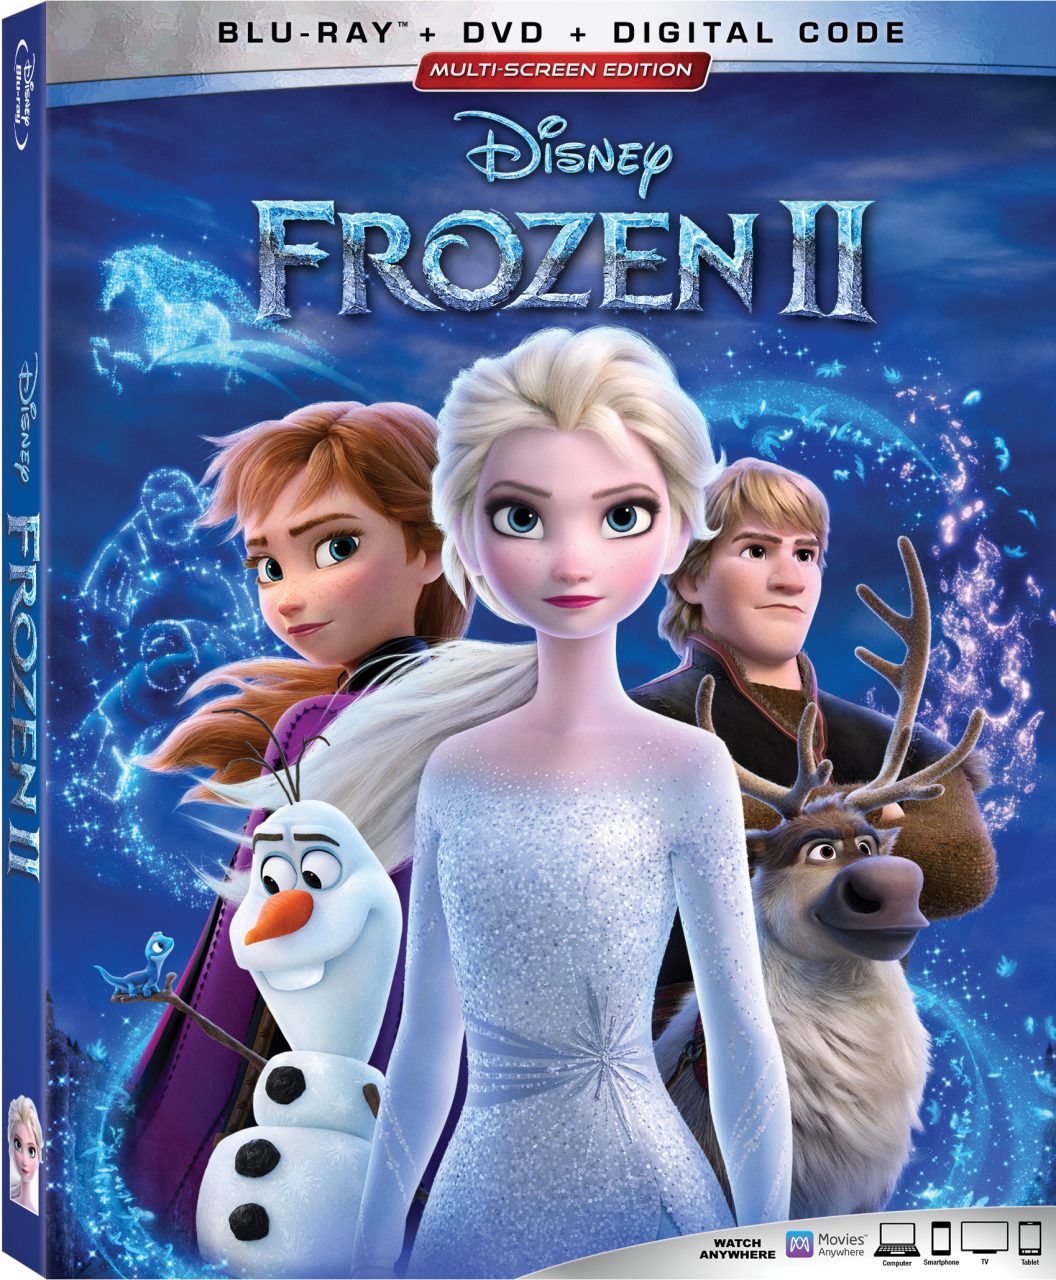 Frozen 2 Blu-Ray Combo Pack cover (Walt Disney Studios Home Entertainment)